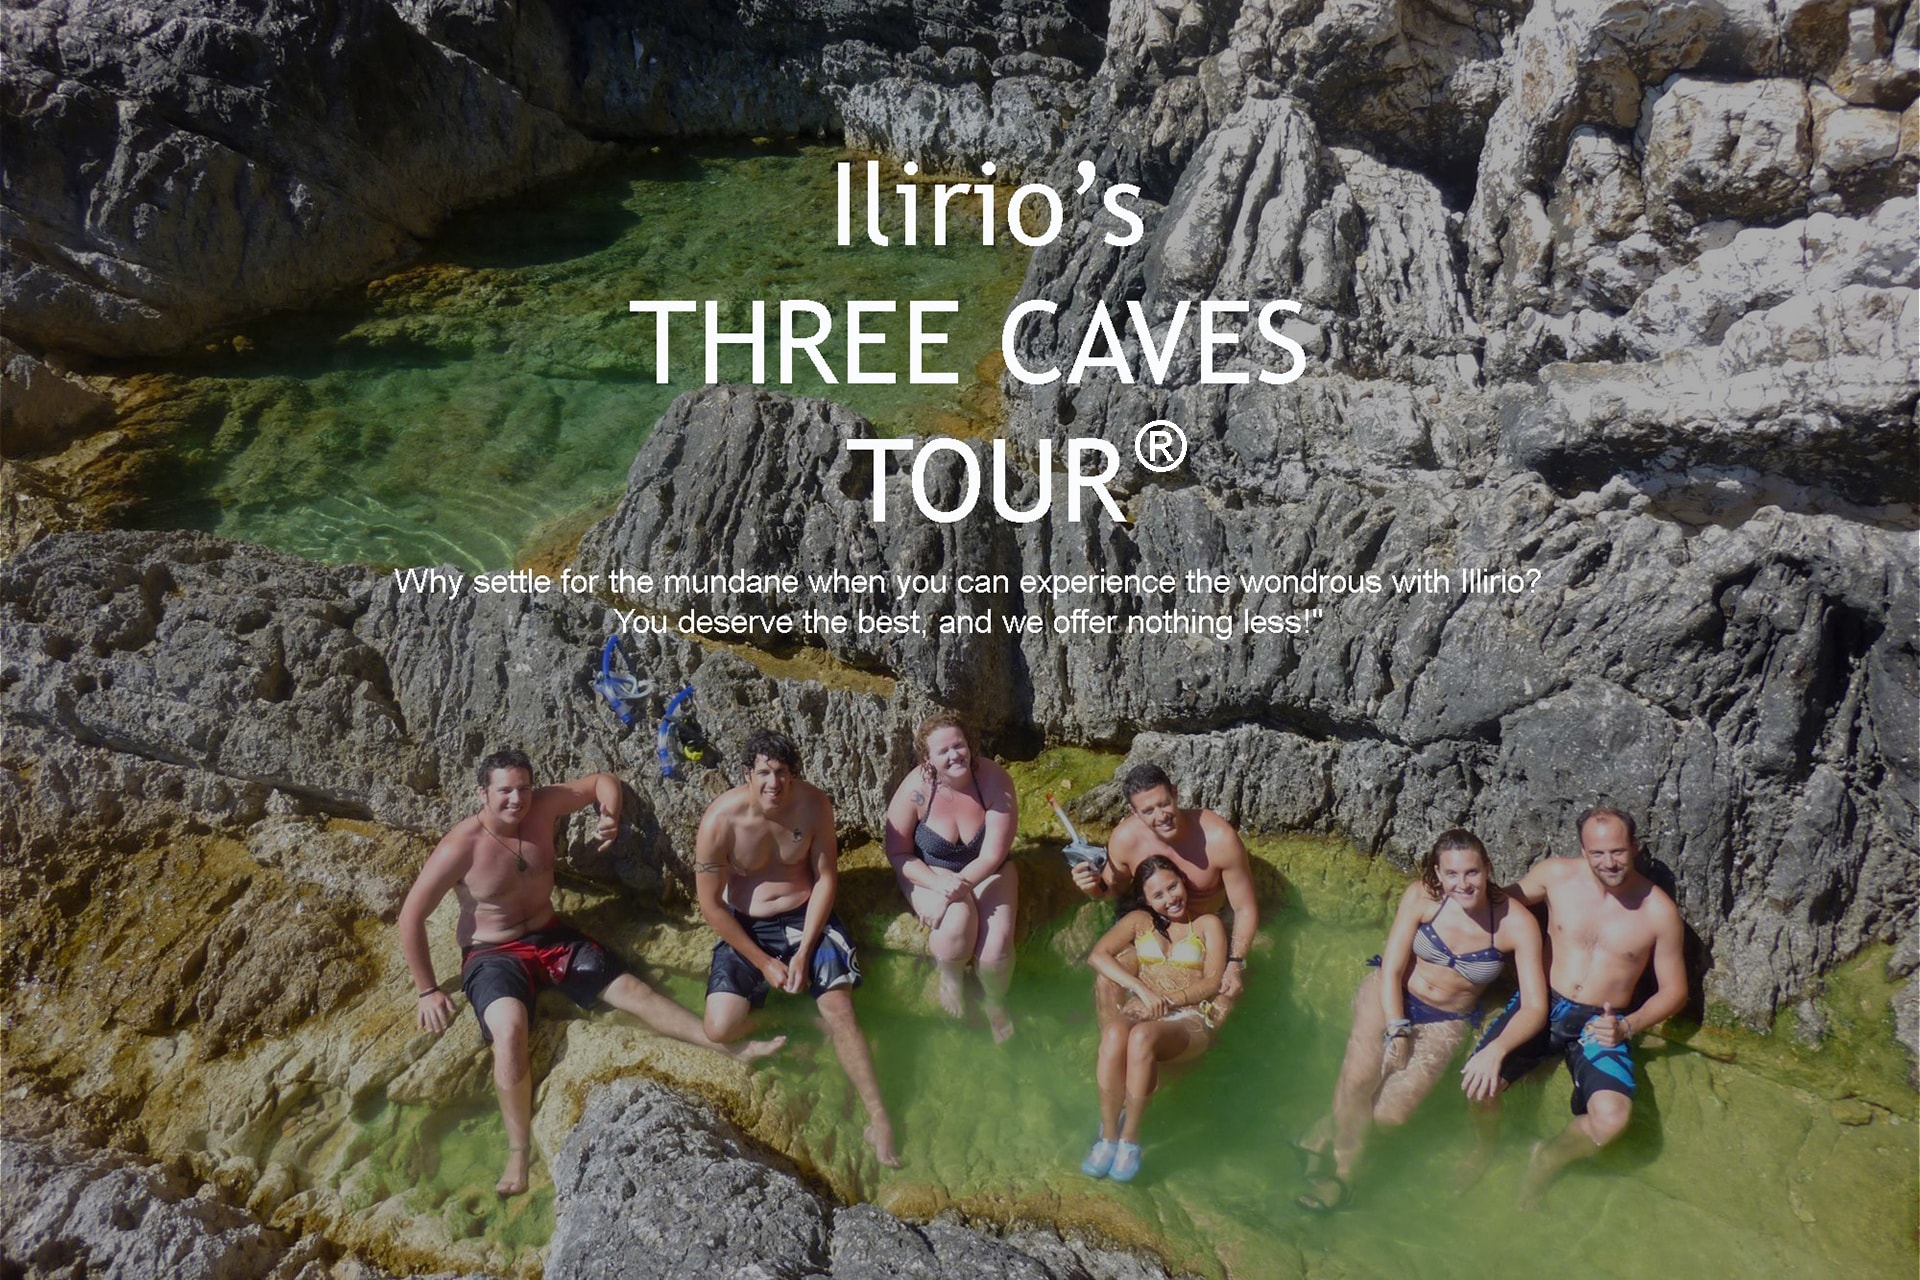  Croatia, Blue grotto and Three Caves Tour